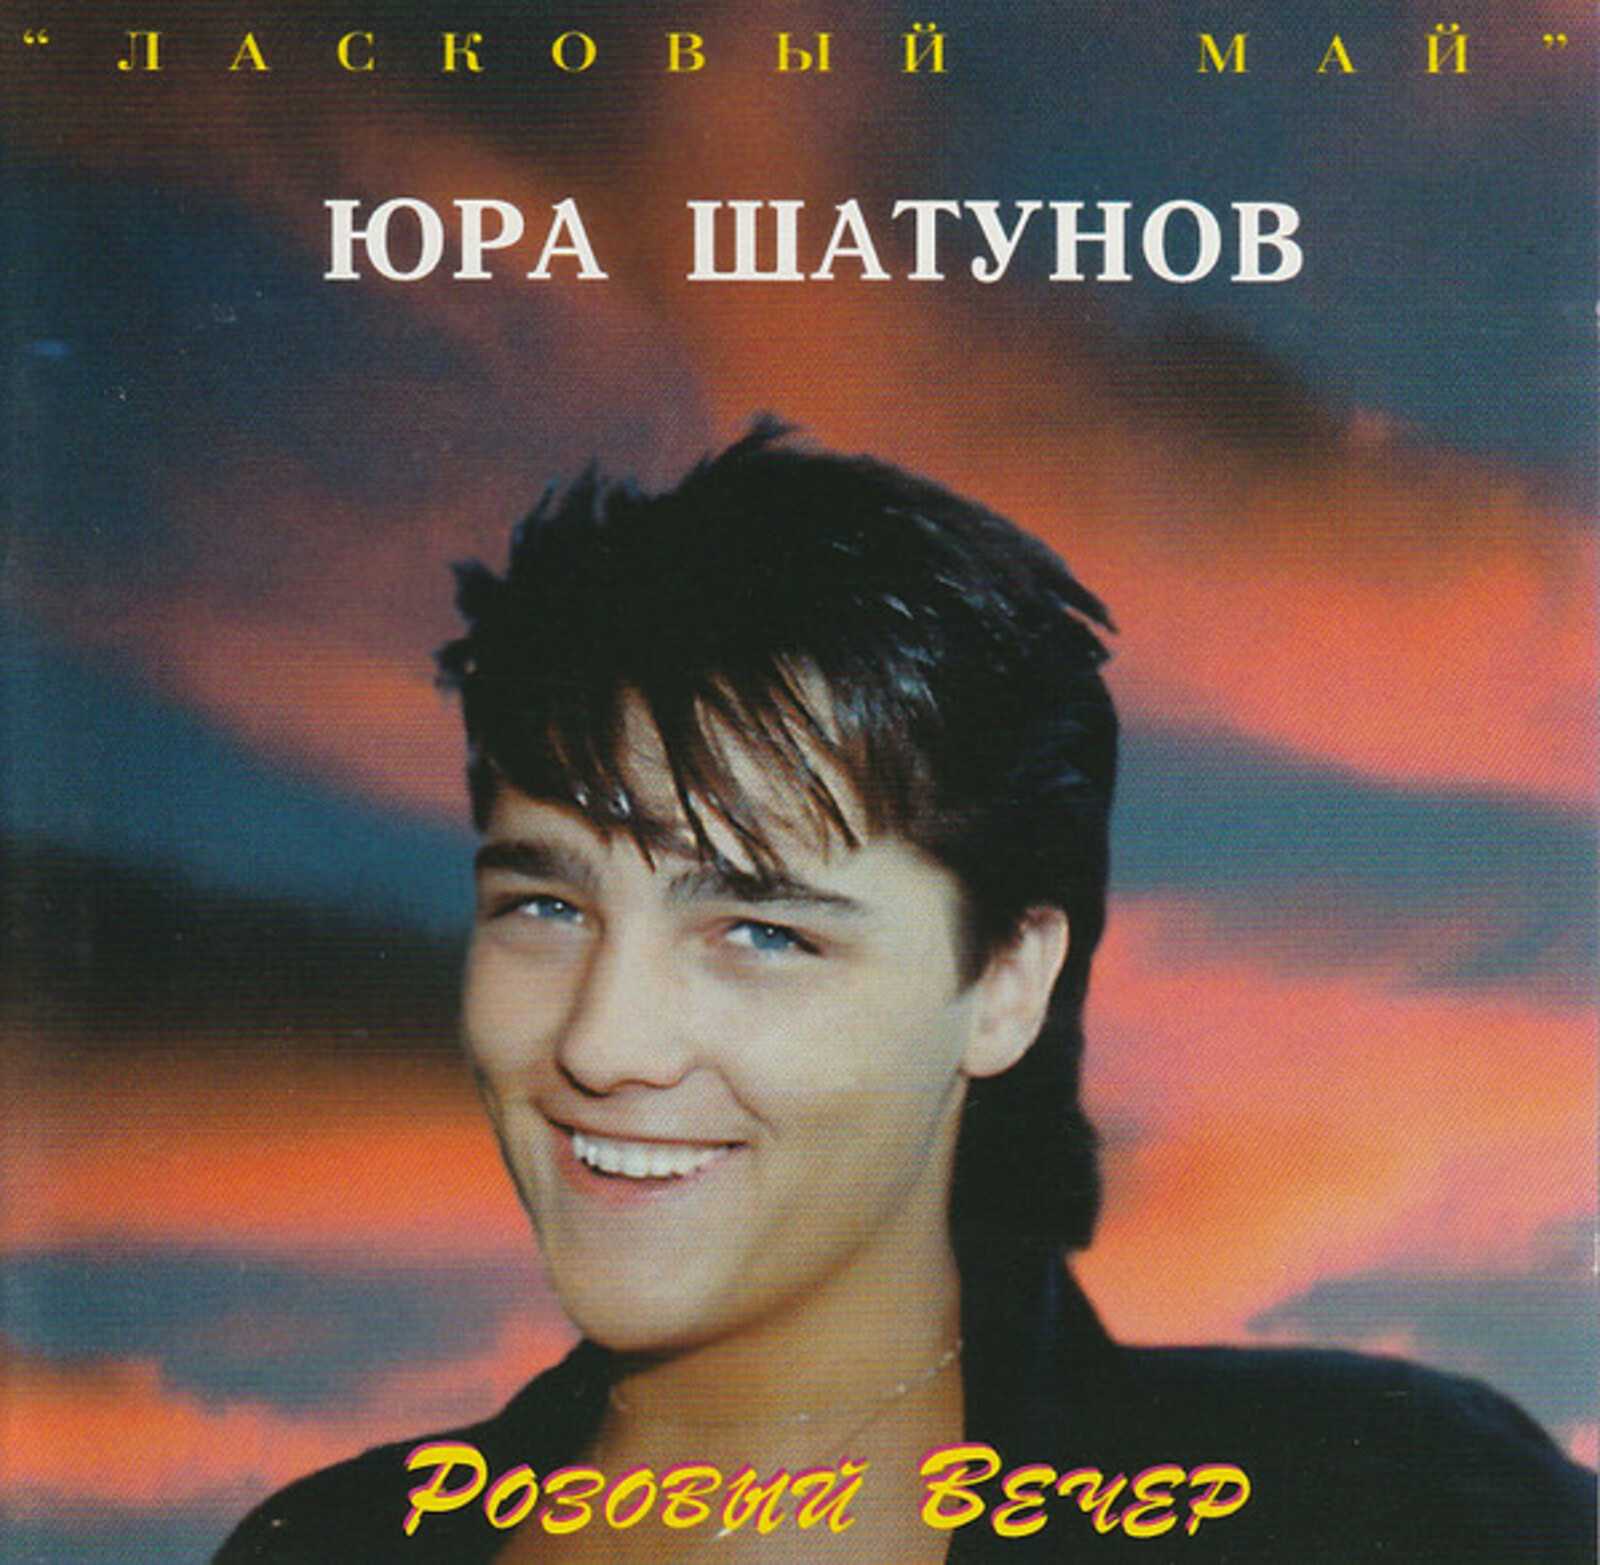 Песня ласкового мая юры шатунова. Юра Шатунов 1988 1989.